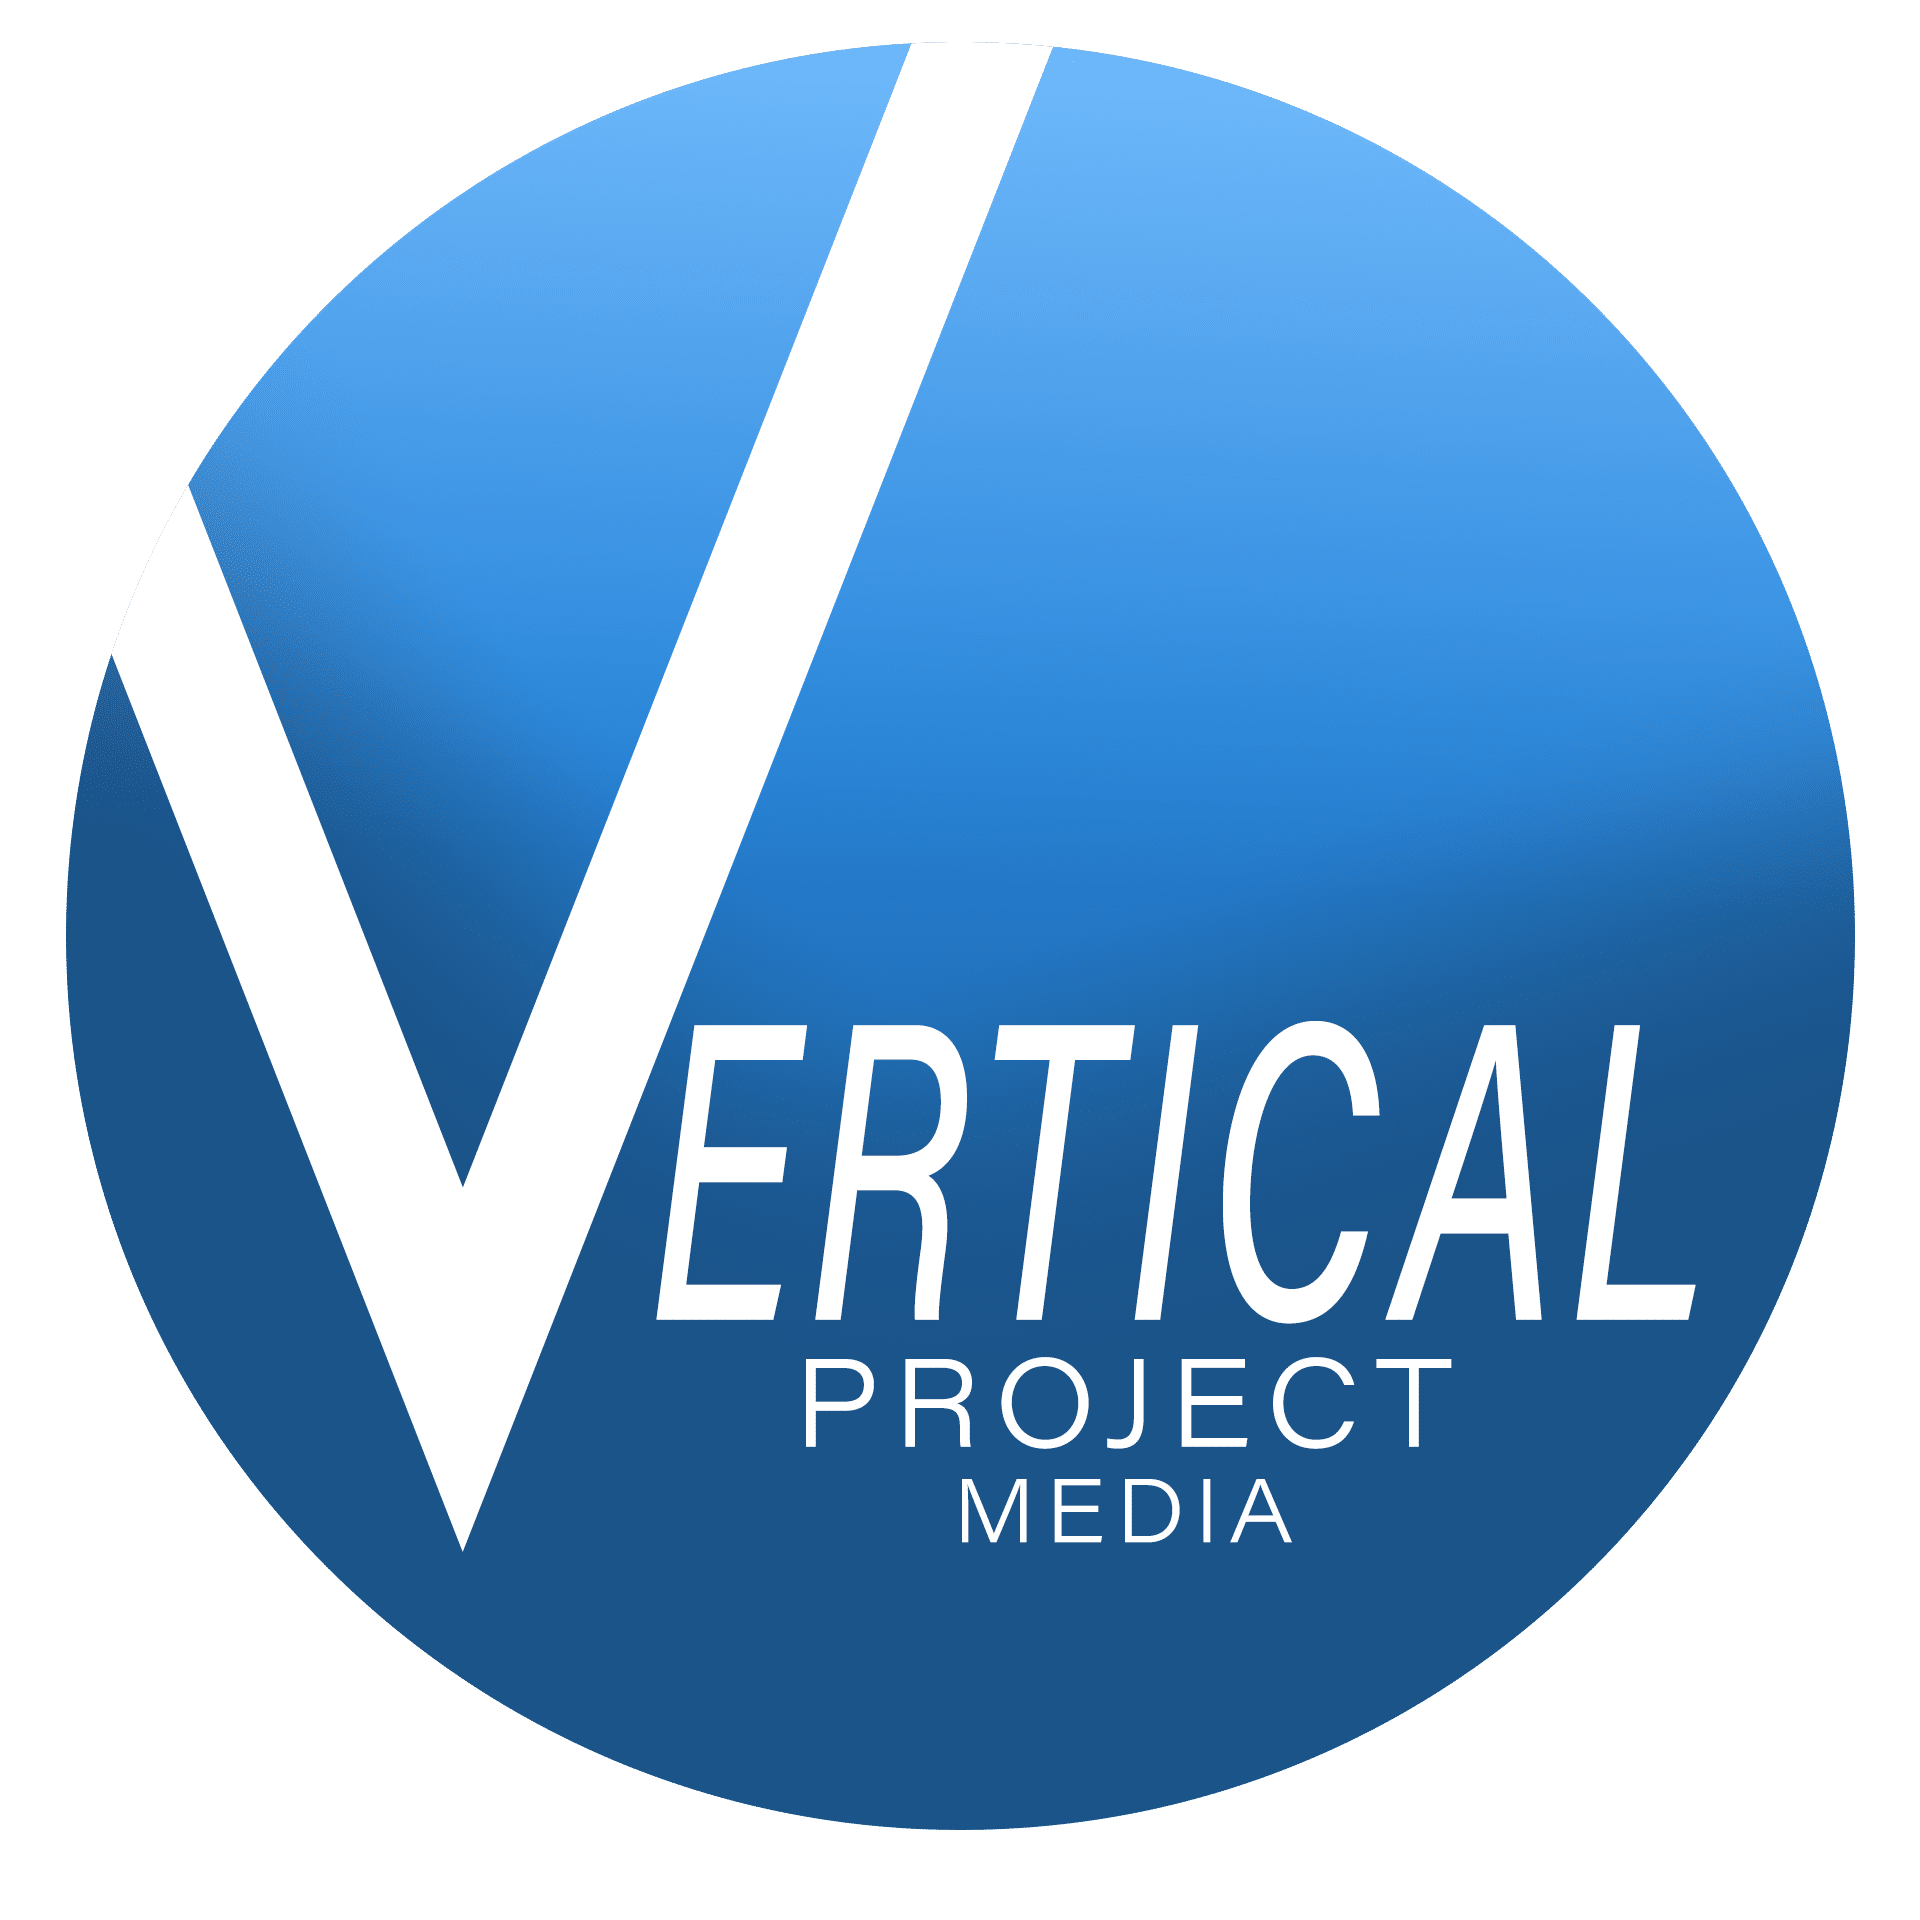 Vertical Project Media